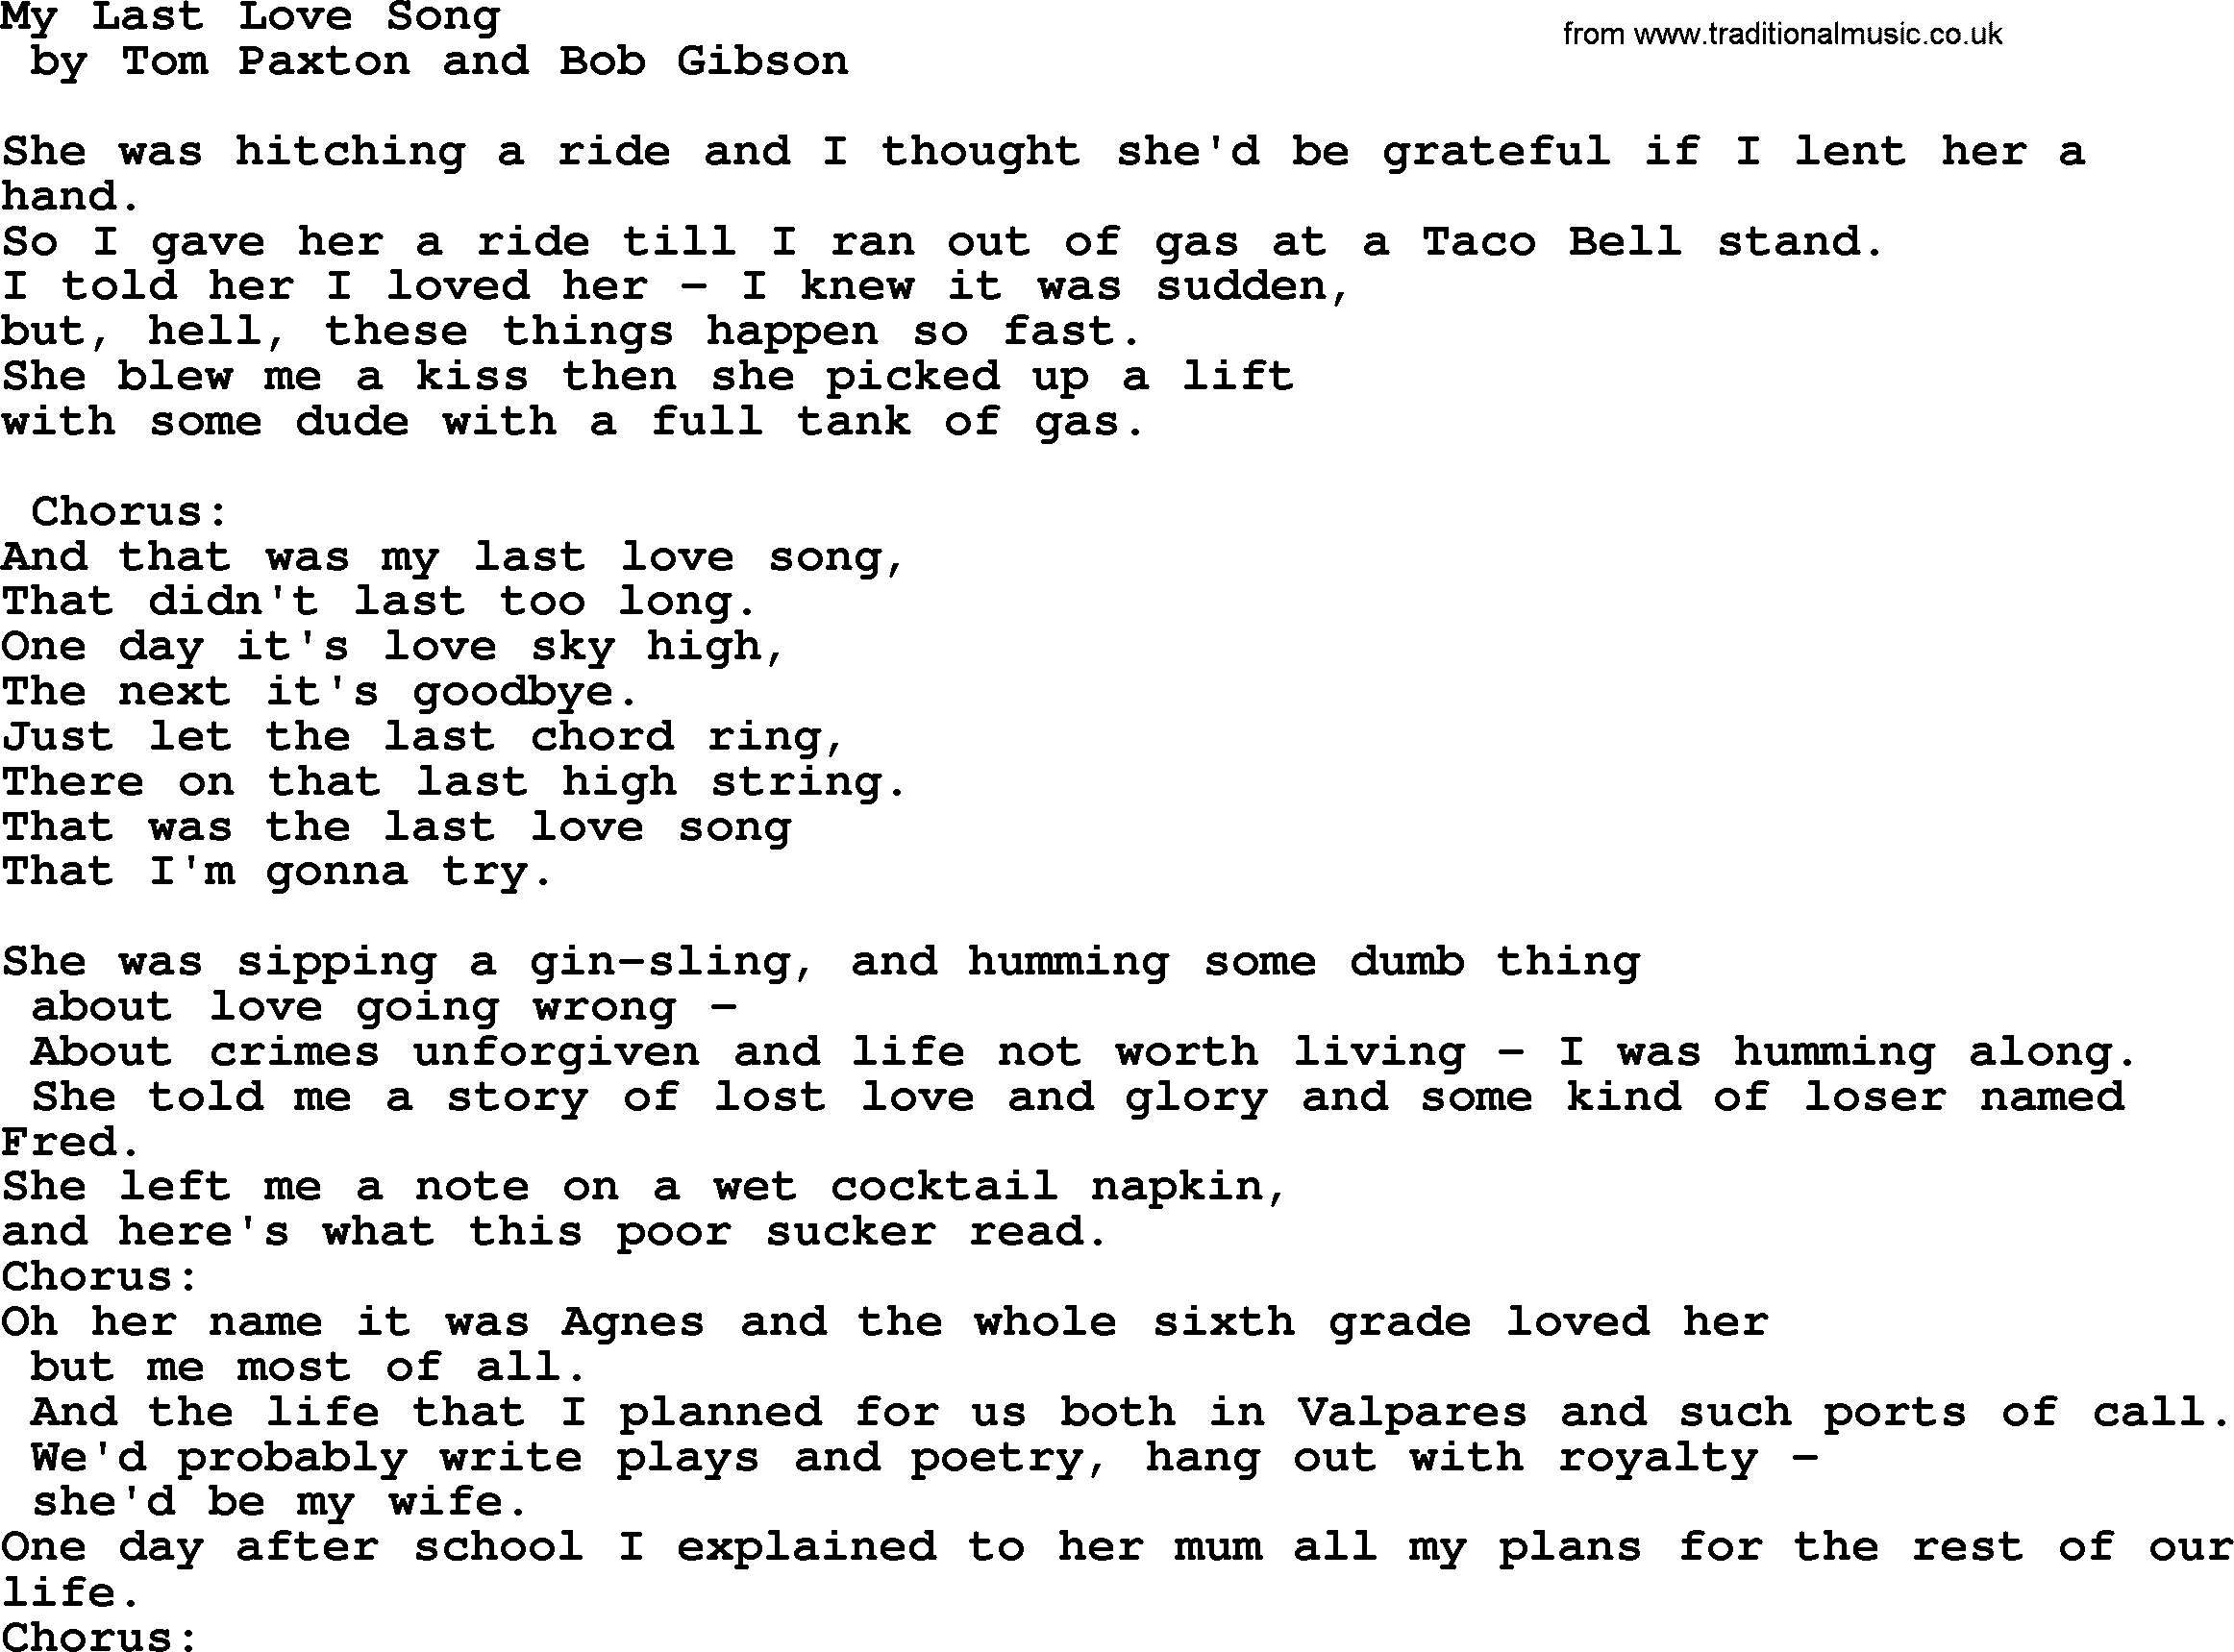 Tom Paxton song: My Last Love Song, lyrics